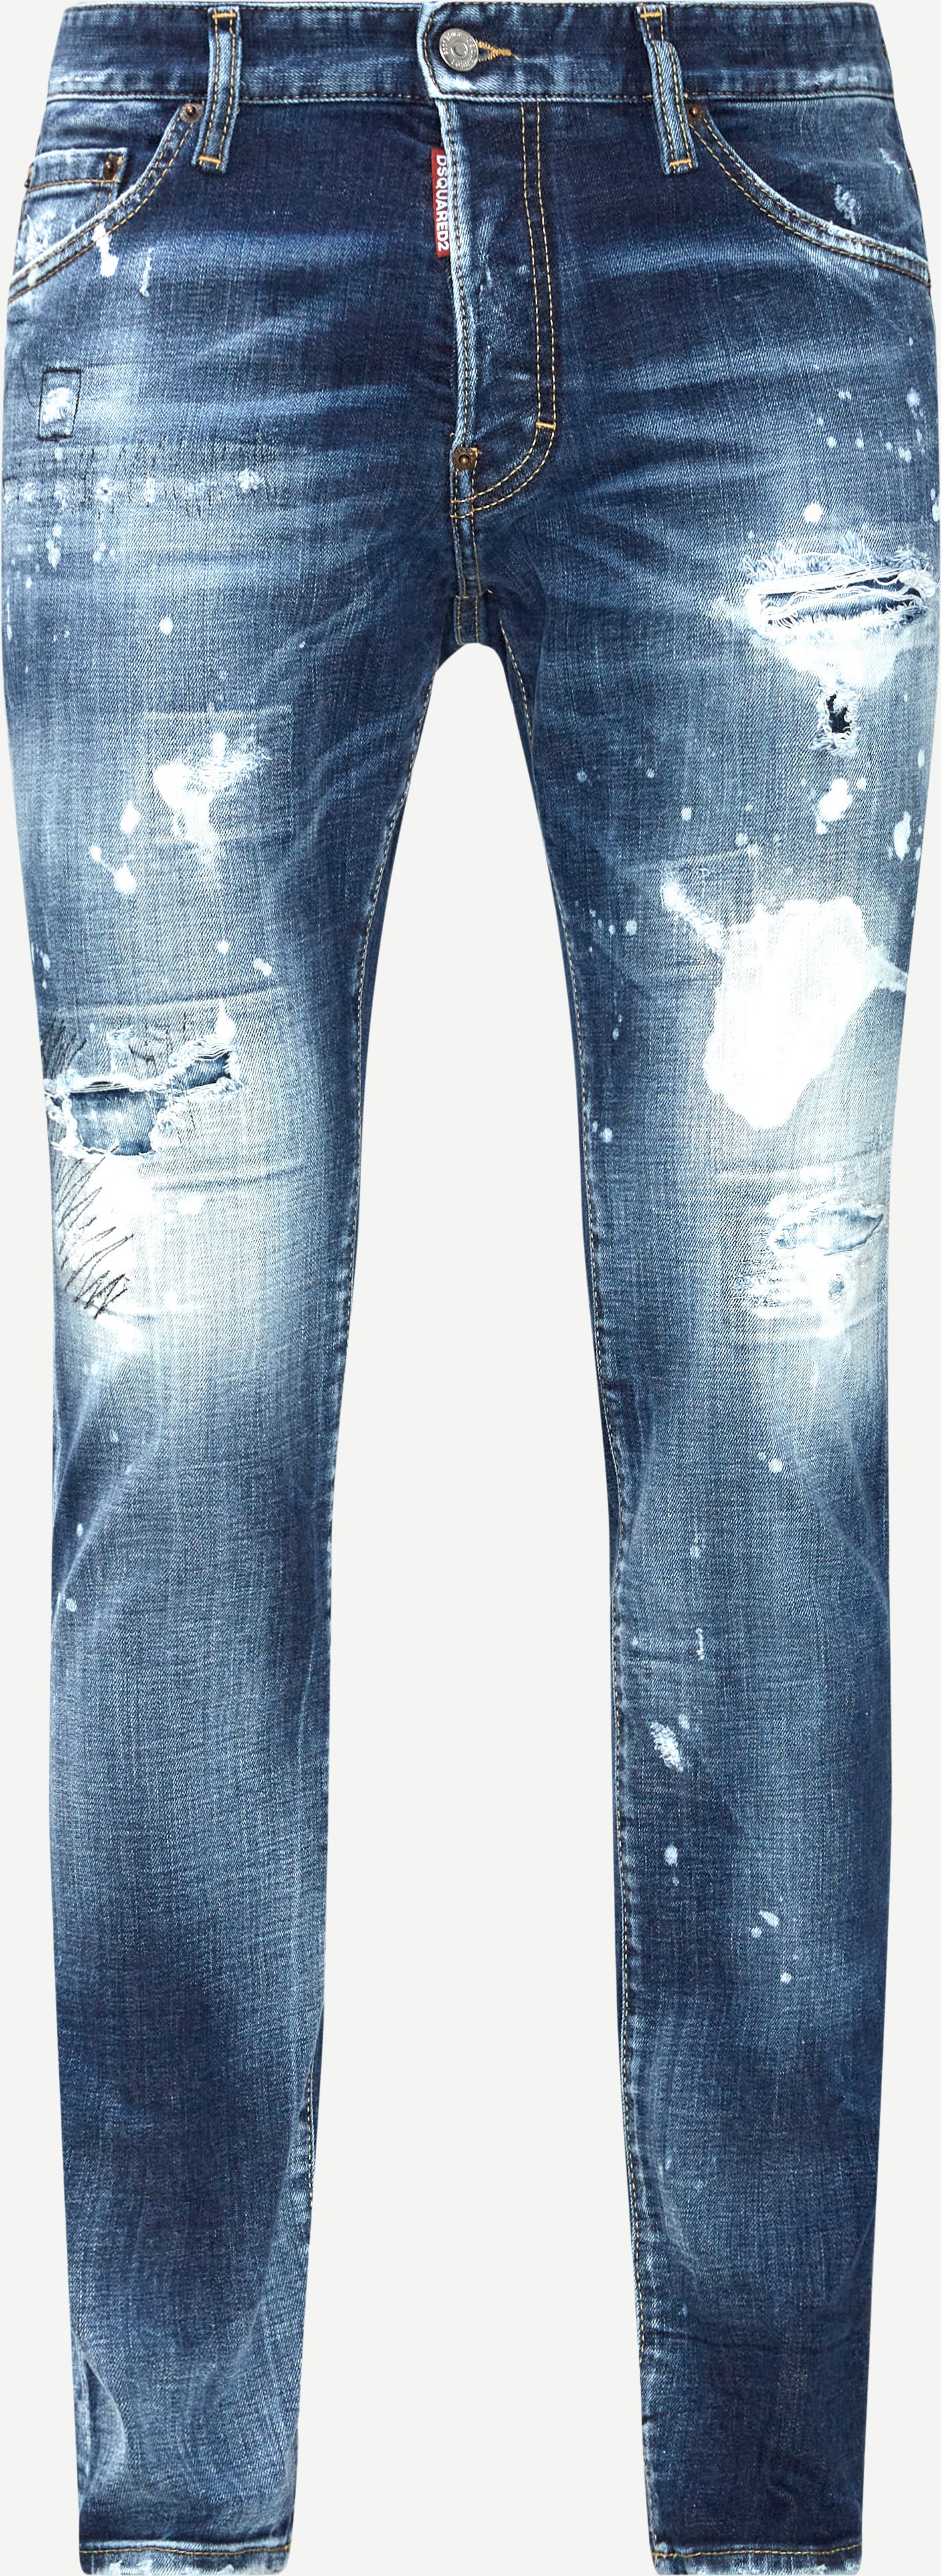 Cool Guy Jeans - Jeans - Slim fit - Denim